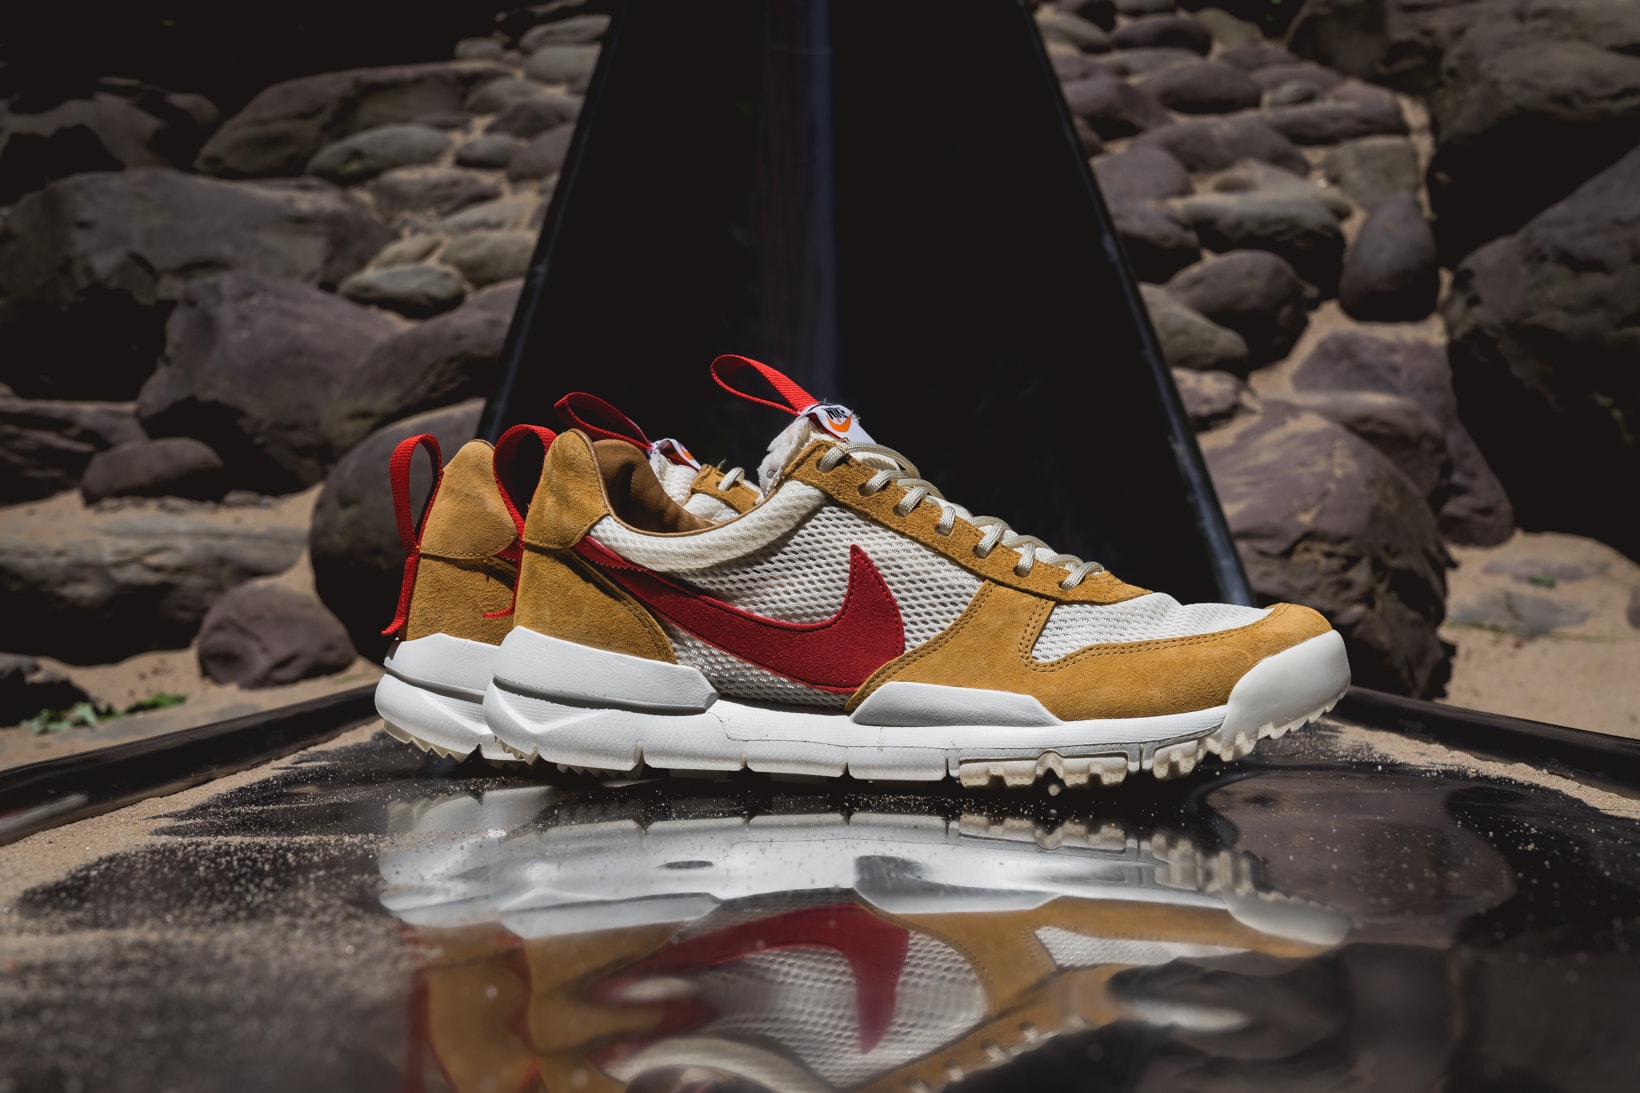 Tom Sachs x Nike Mars Yard Shoe 2.0 Closer Look Hypebeast